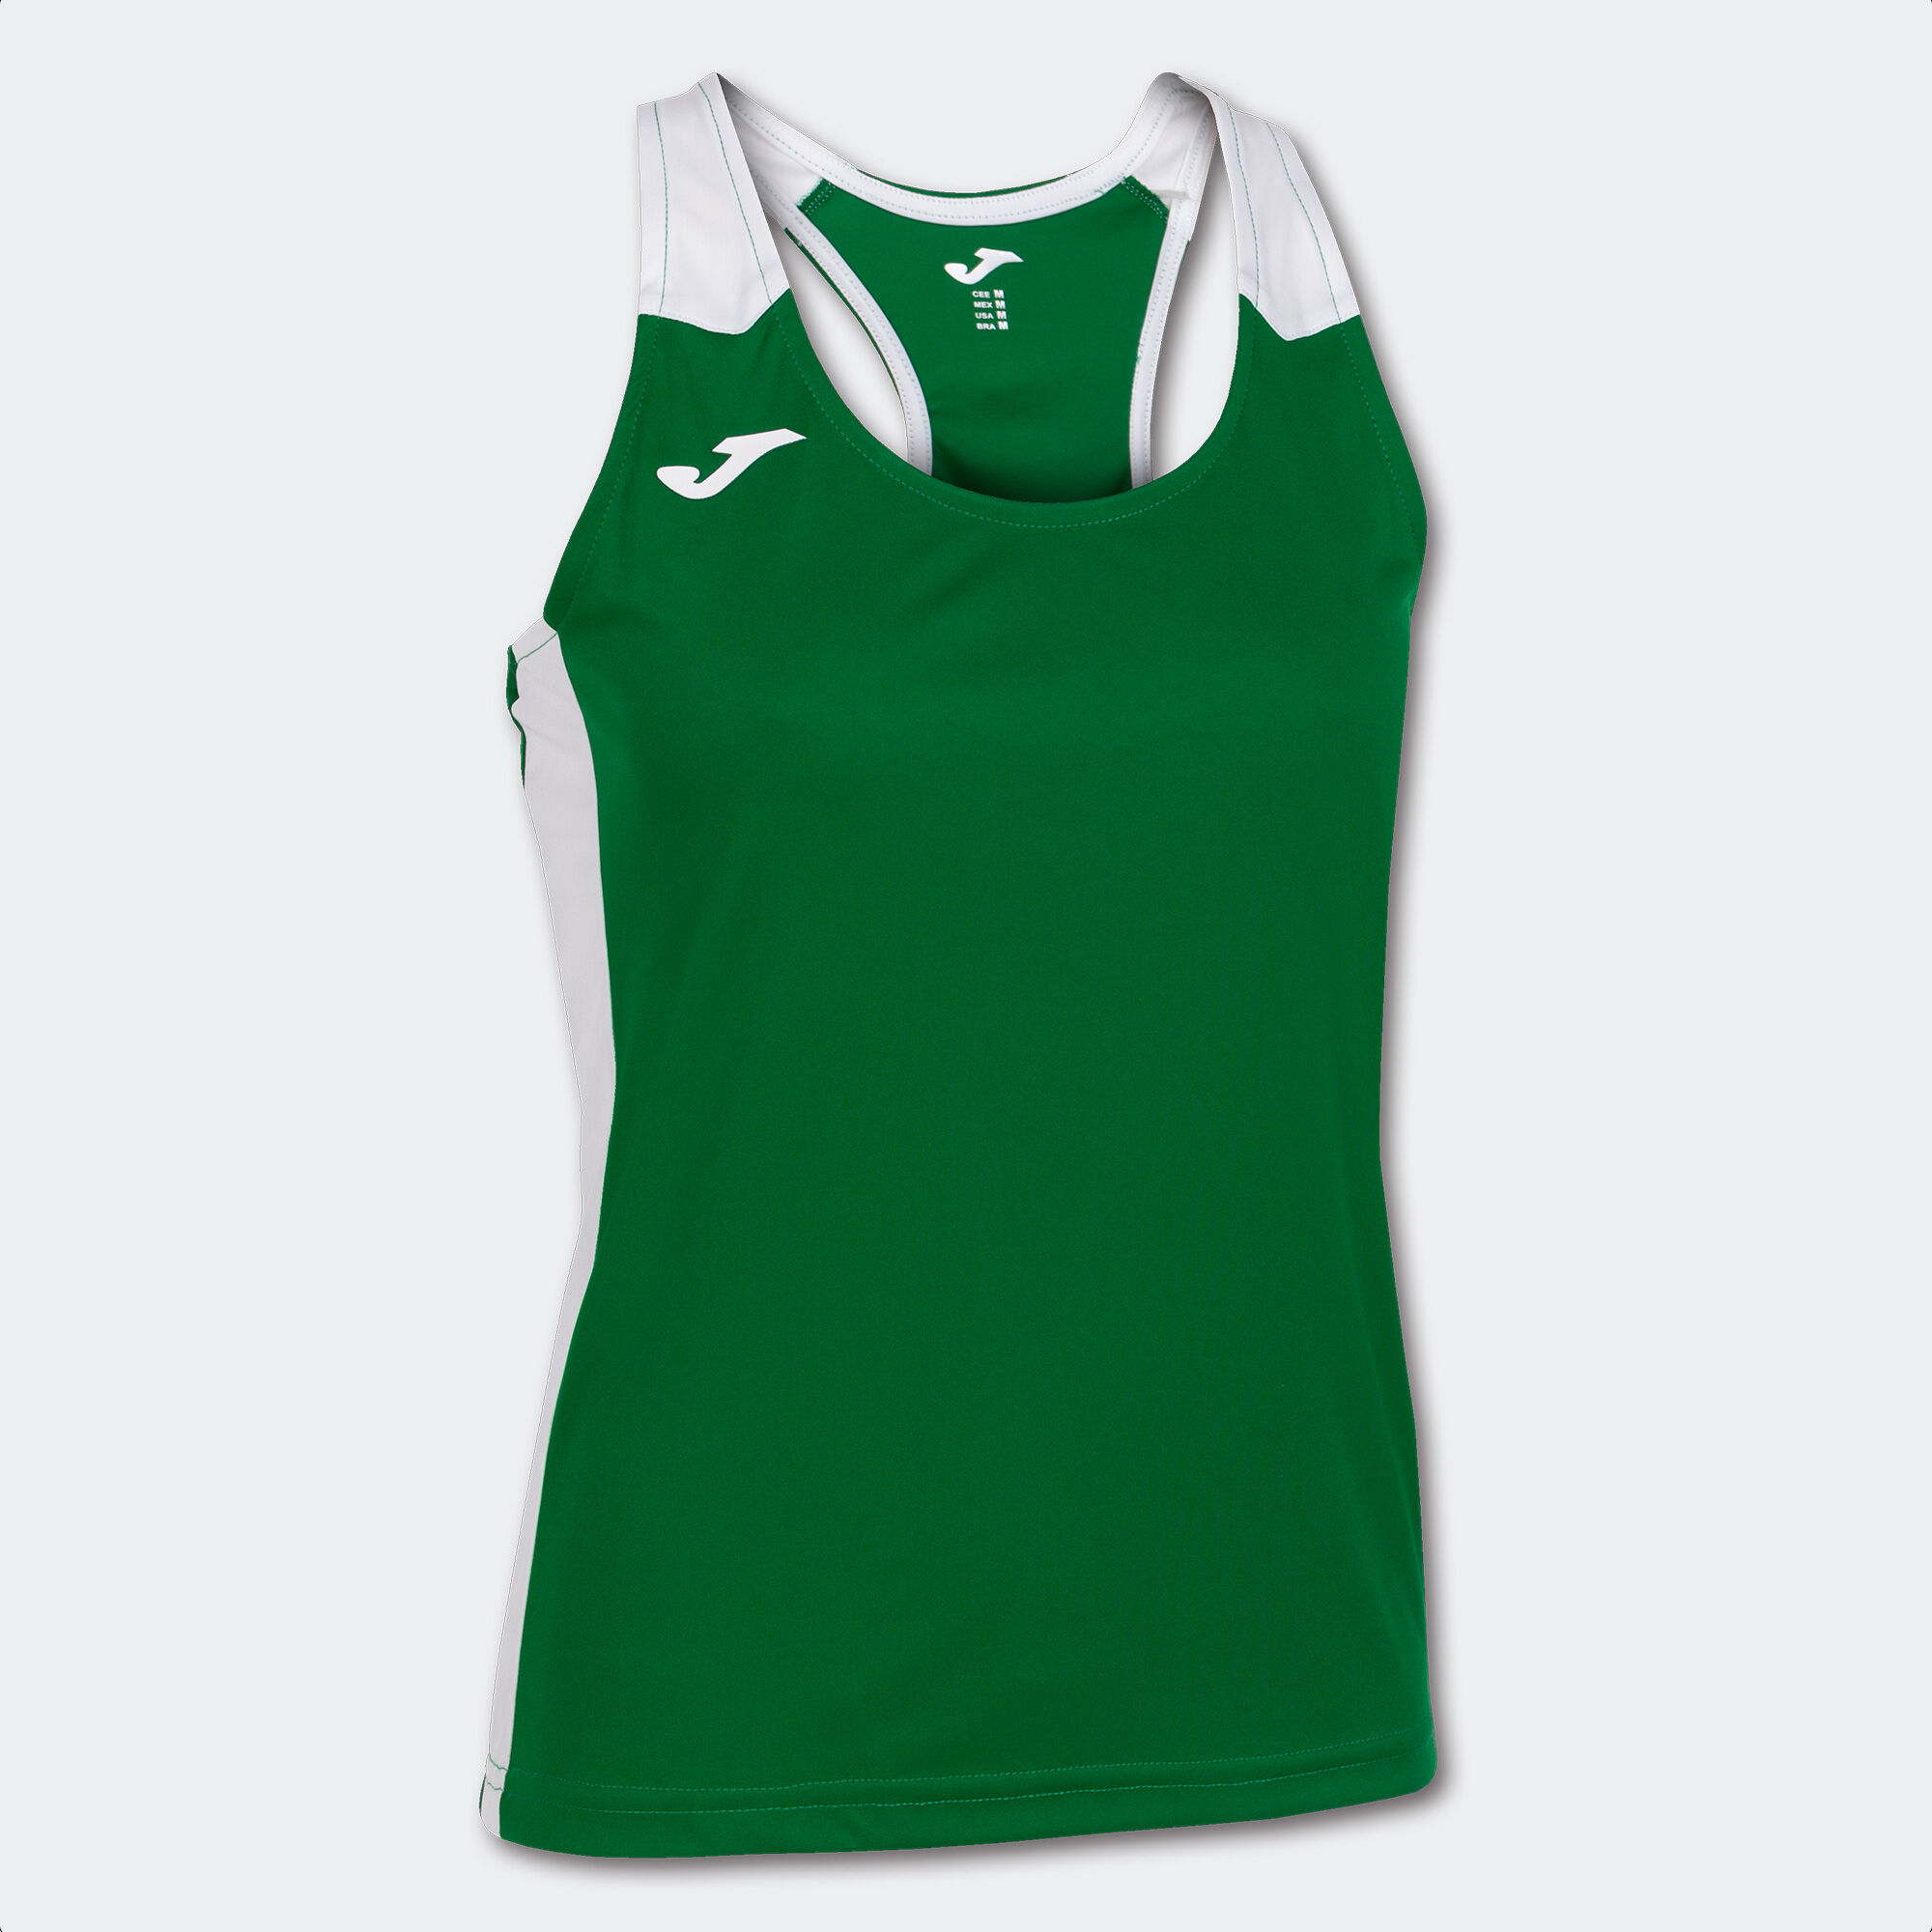 Schulterriemen-shirt frau Record II grün weiß